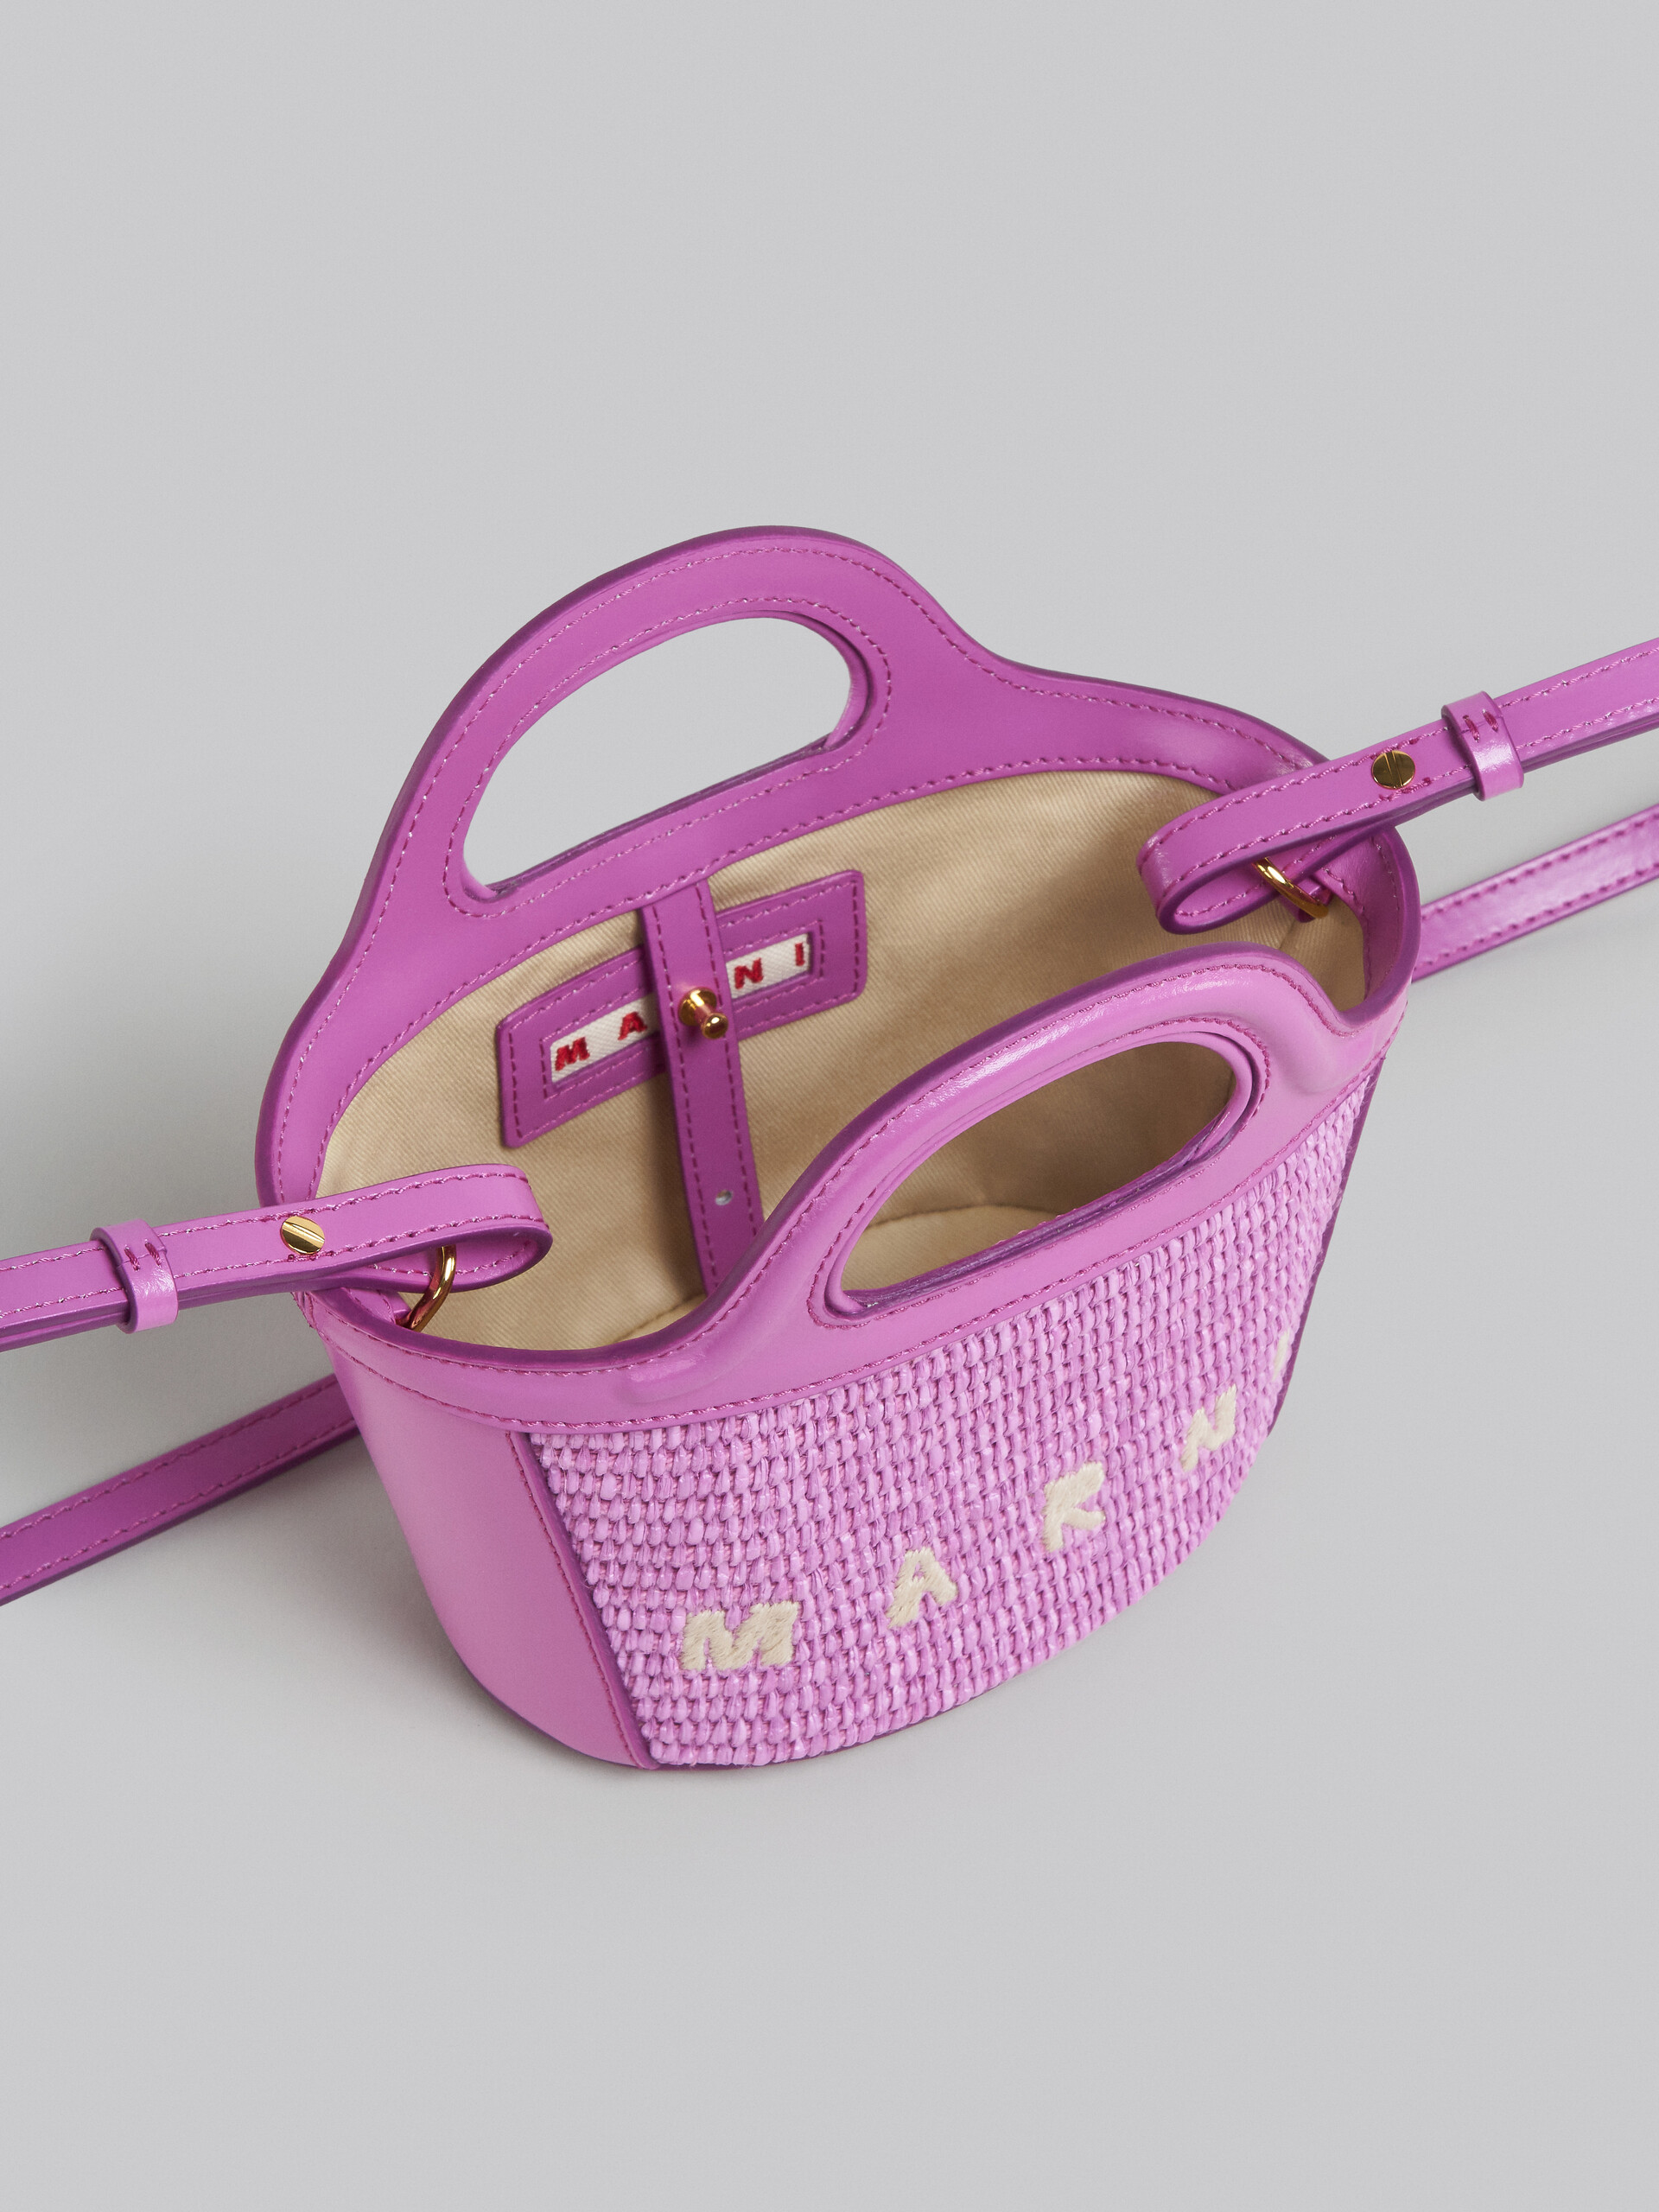 Tropicalia Micro Bag in lilac leather and raffia - Handbag - Image 4